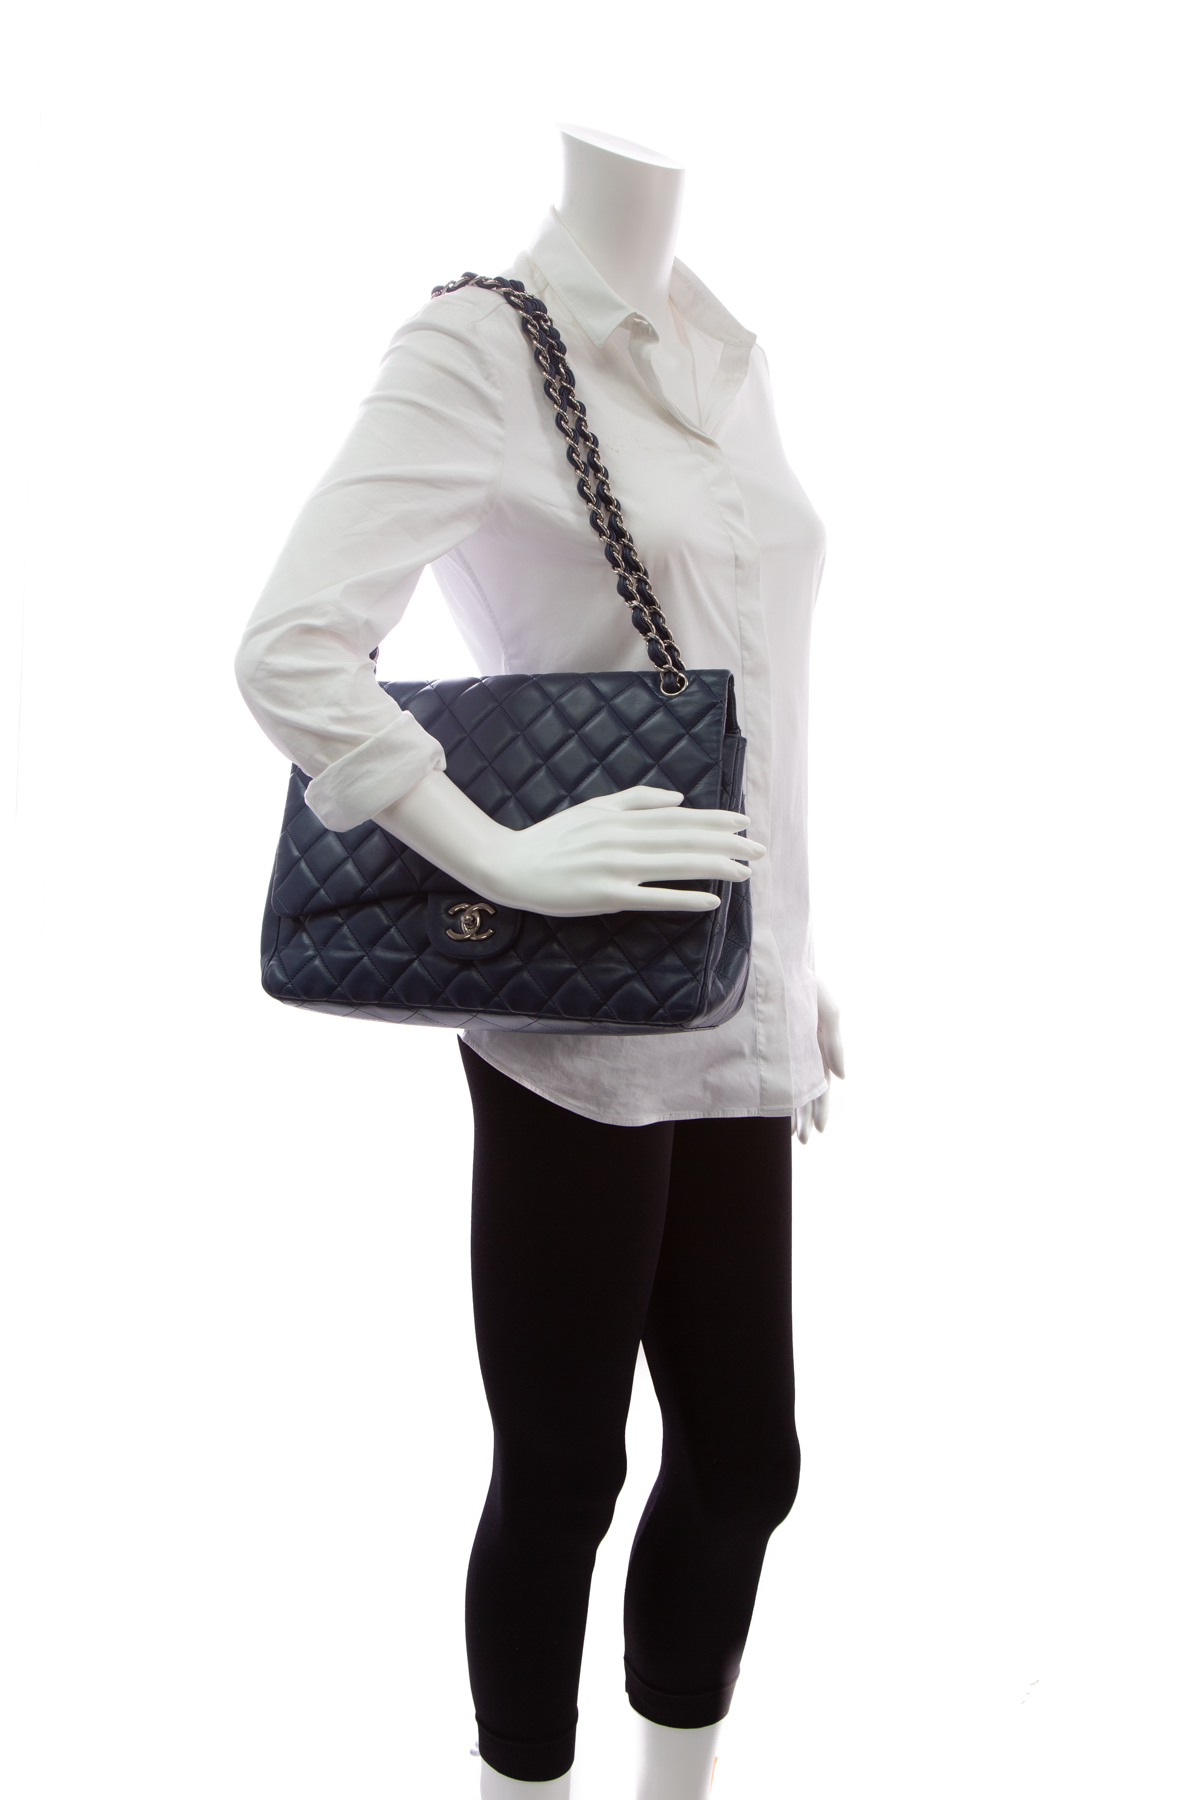 CHANEL Classic Maxi Jumbo Double Flap Caviar Leather Shoulder Bag-US